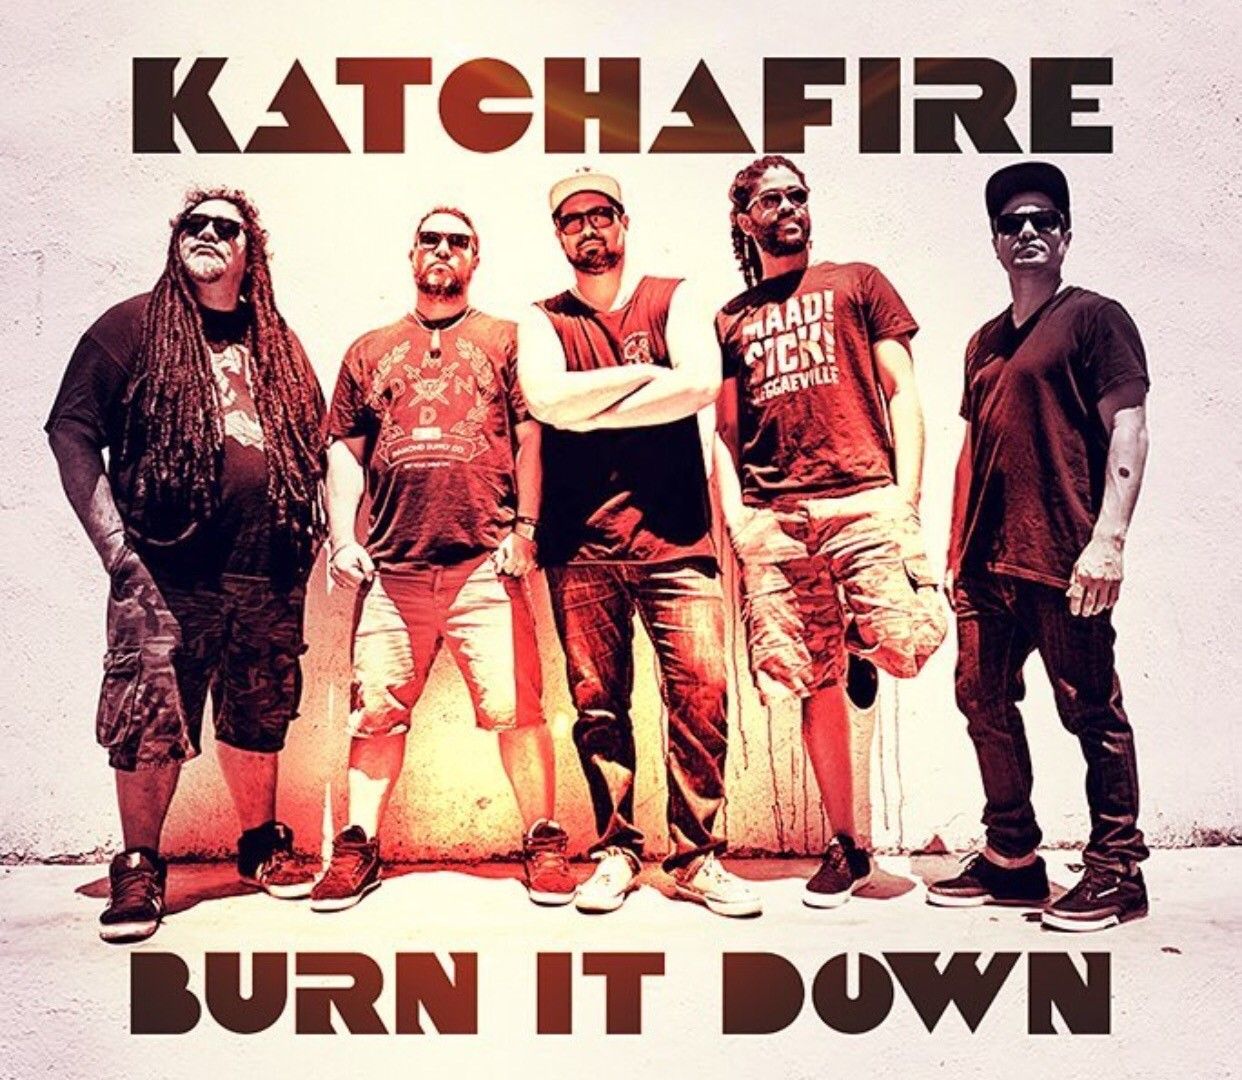  photo Katchafire burn it down_zpspr1u4mrn.jpg